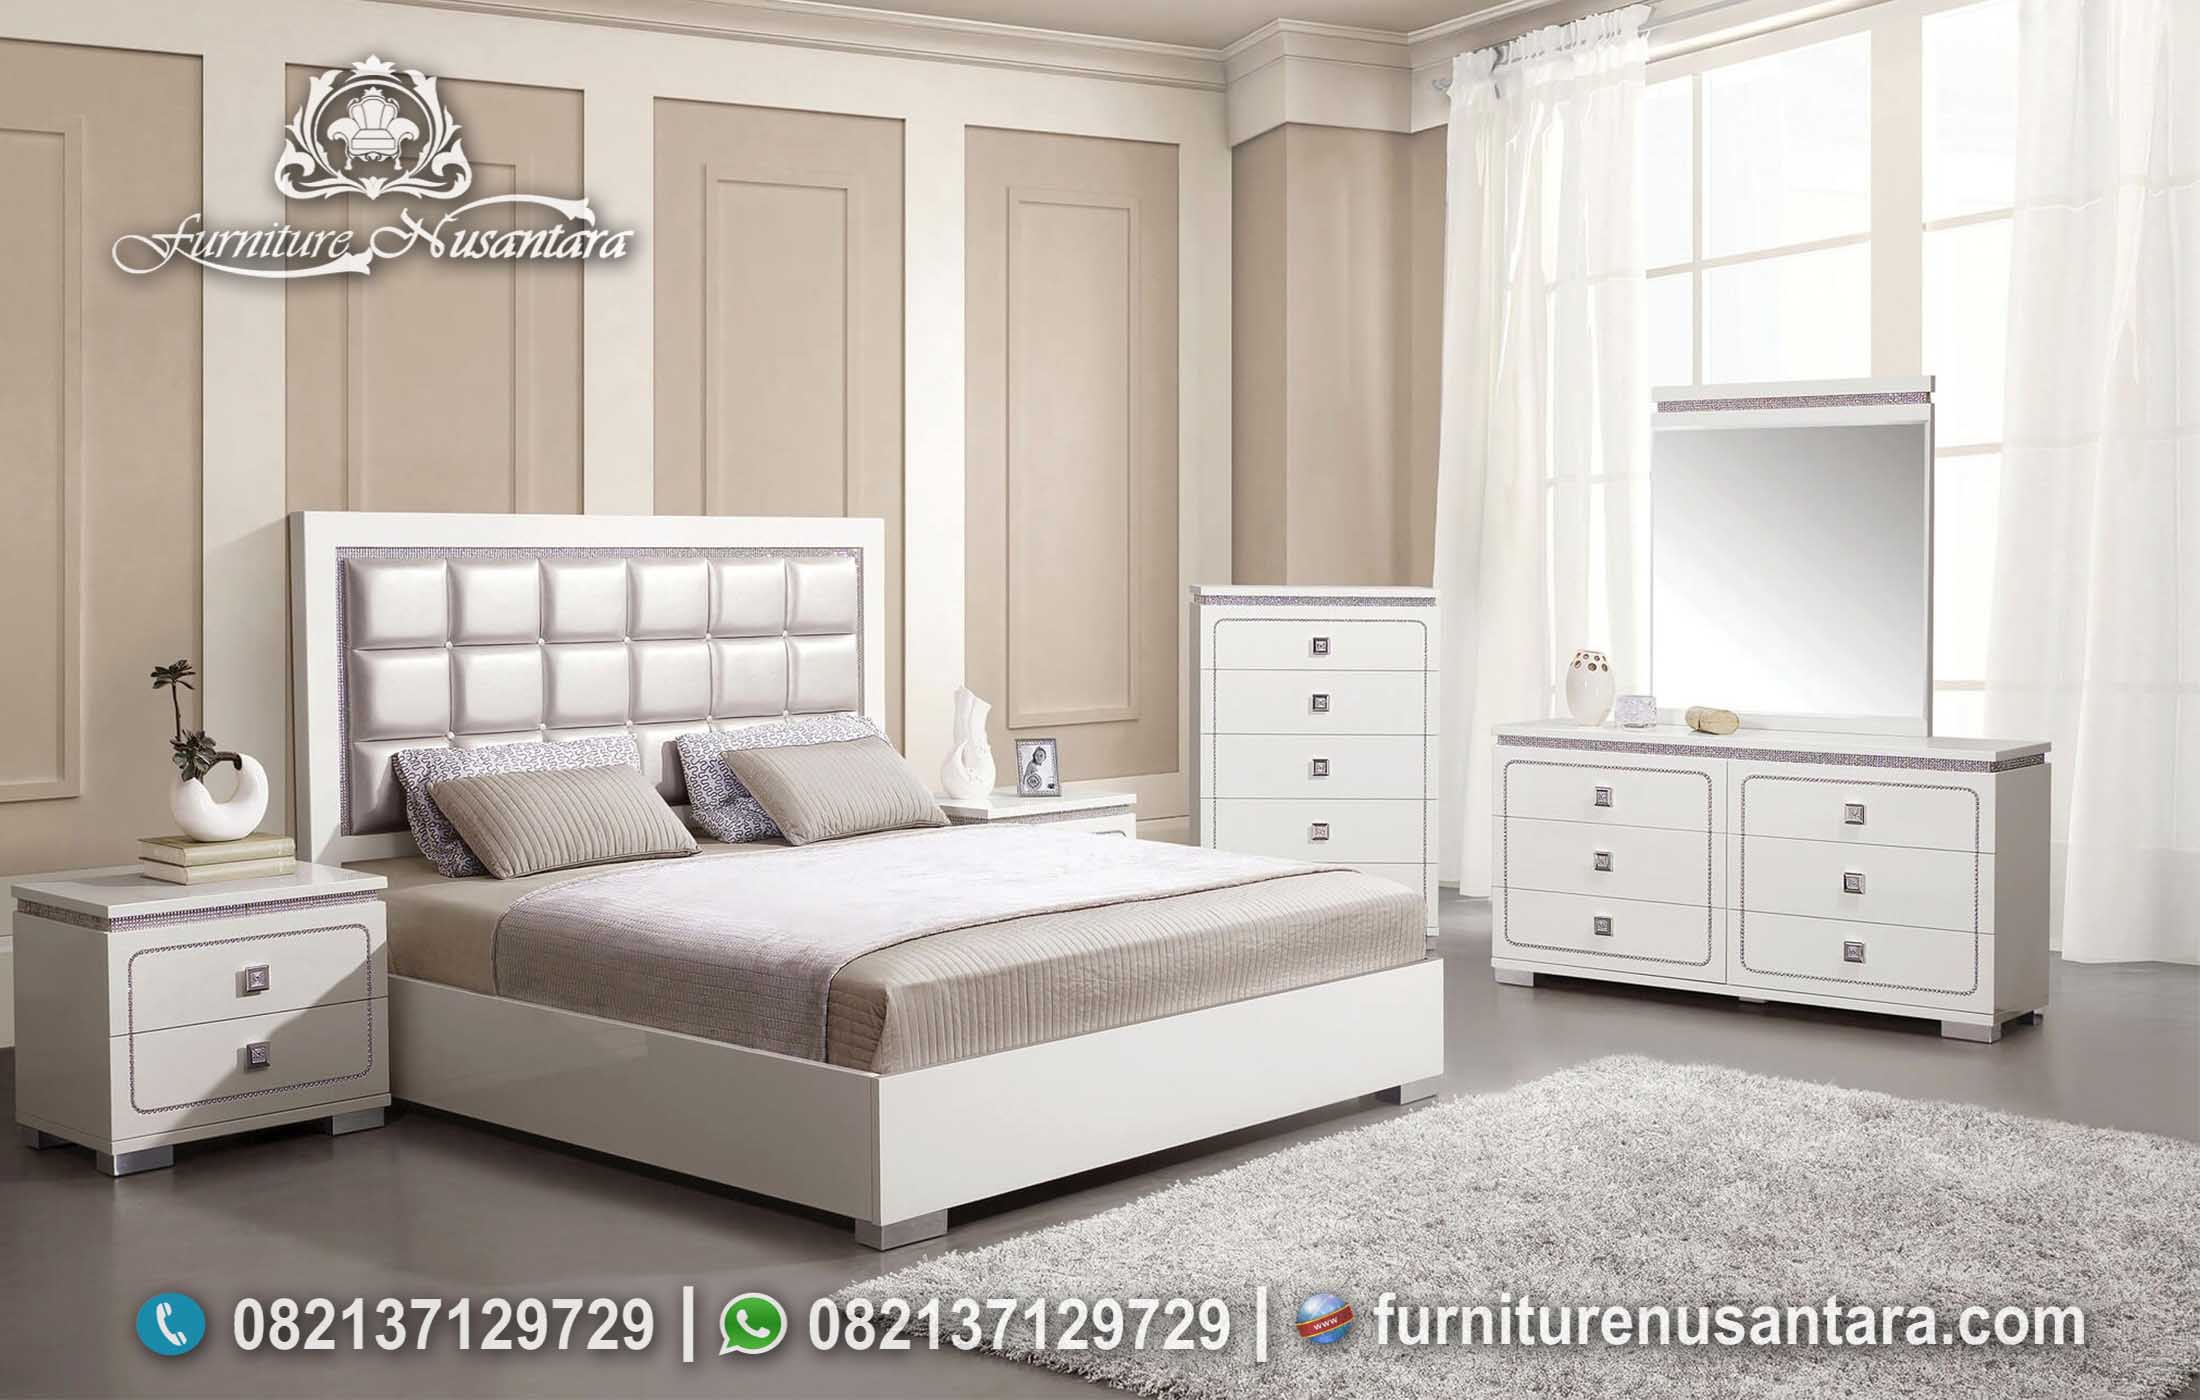 Desain Tempat Tidur Minimalis Stylist KS-166, Furniture Nusantara